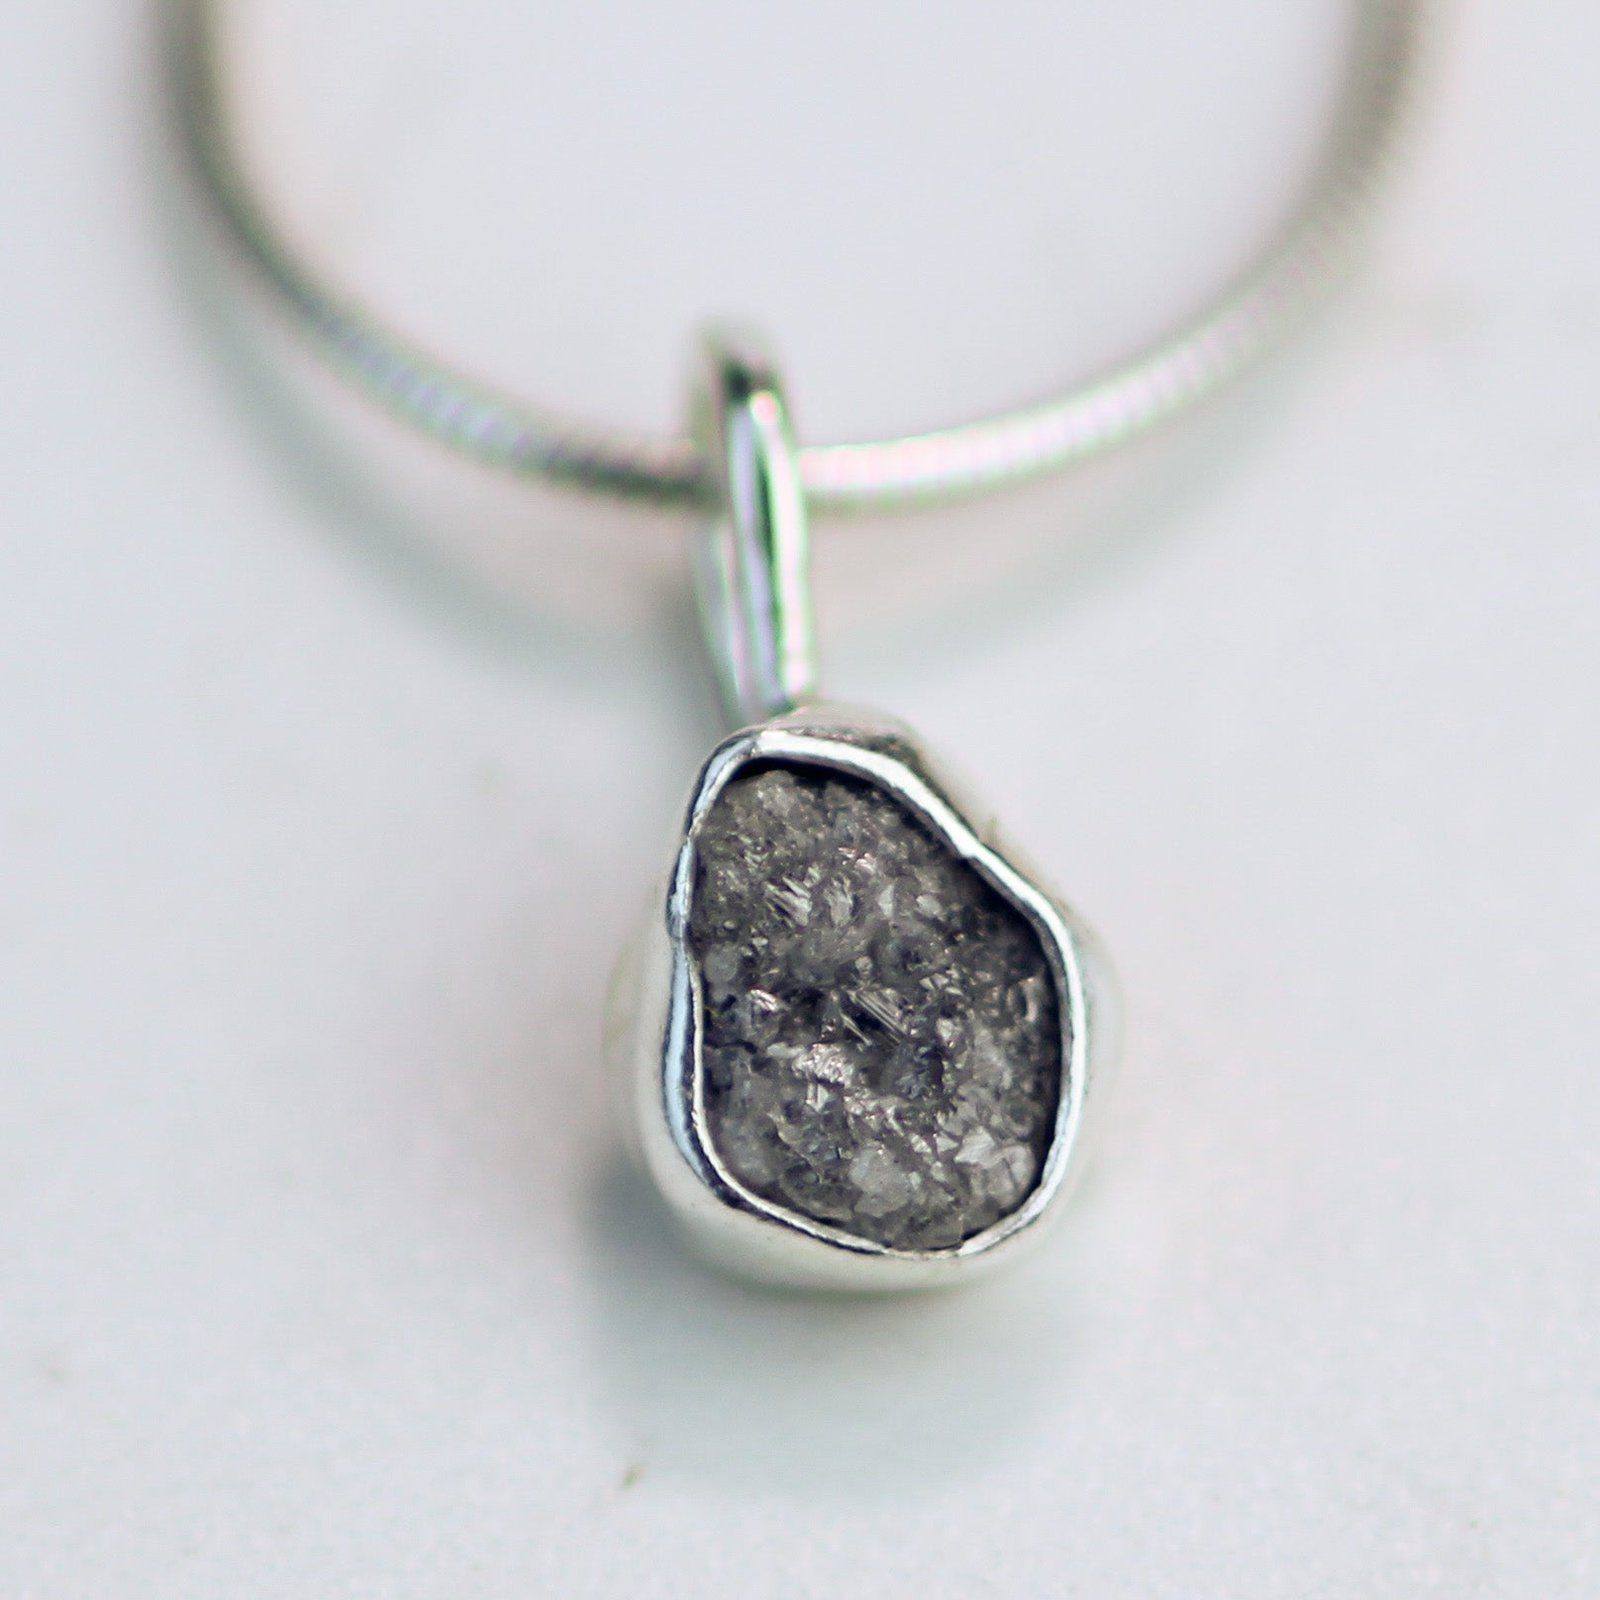 Diamond pendant | Louella Jewellery